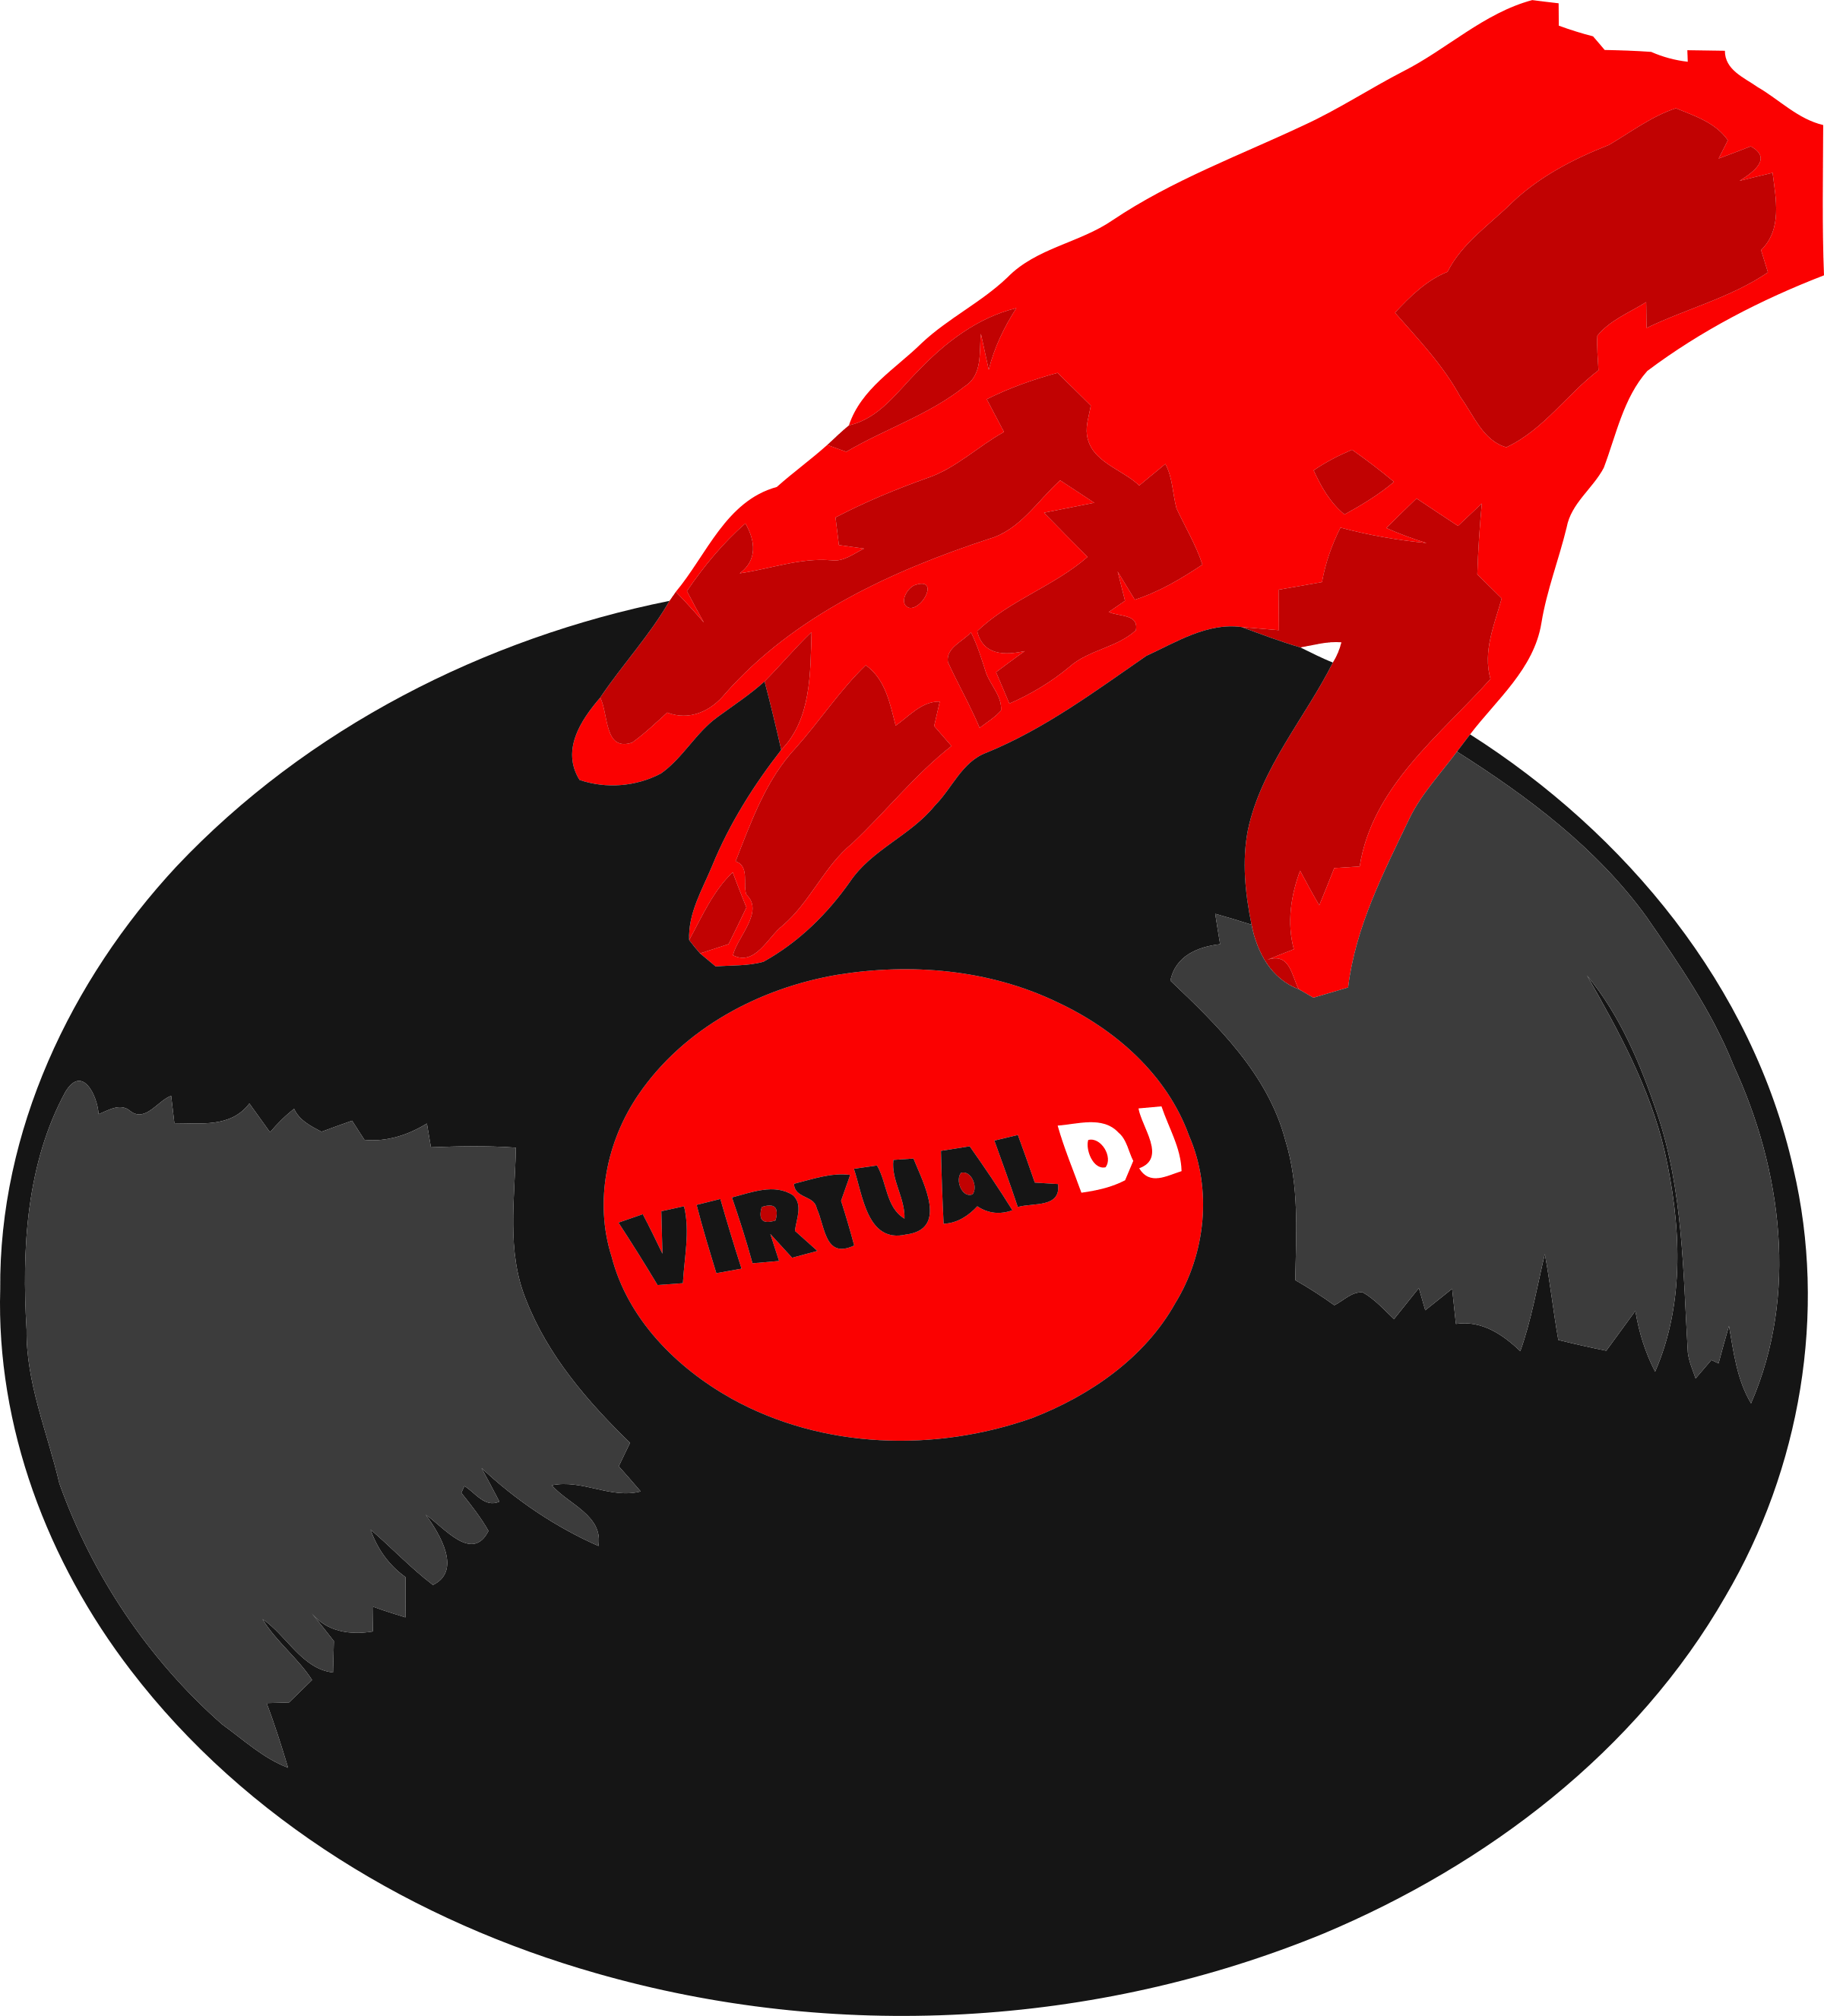 VirtualDJ Logo - Virtual DJ Logo PNG Transparent & SVG Vector